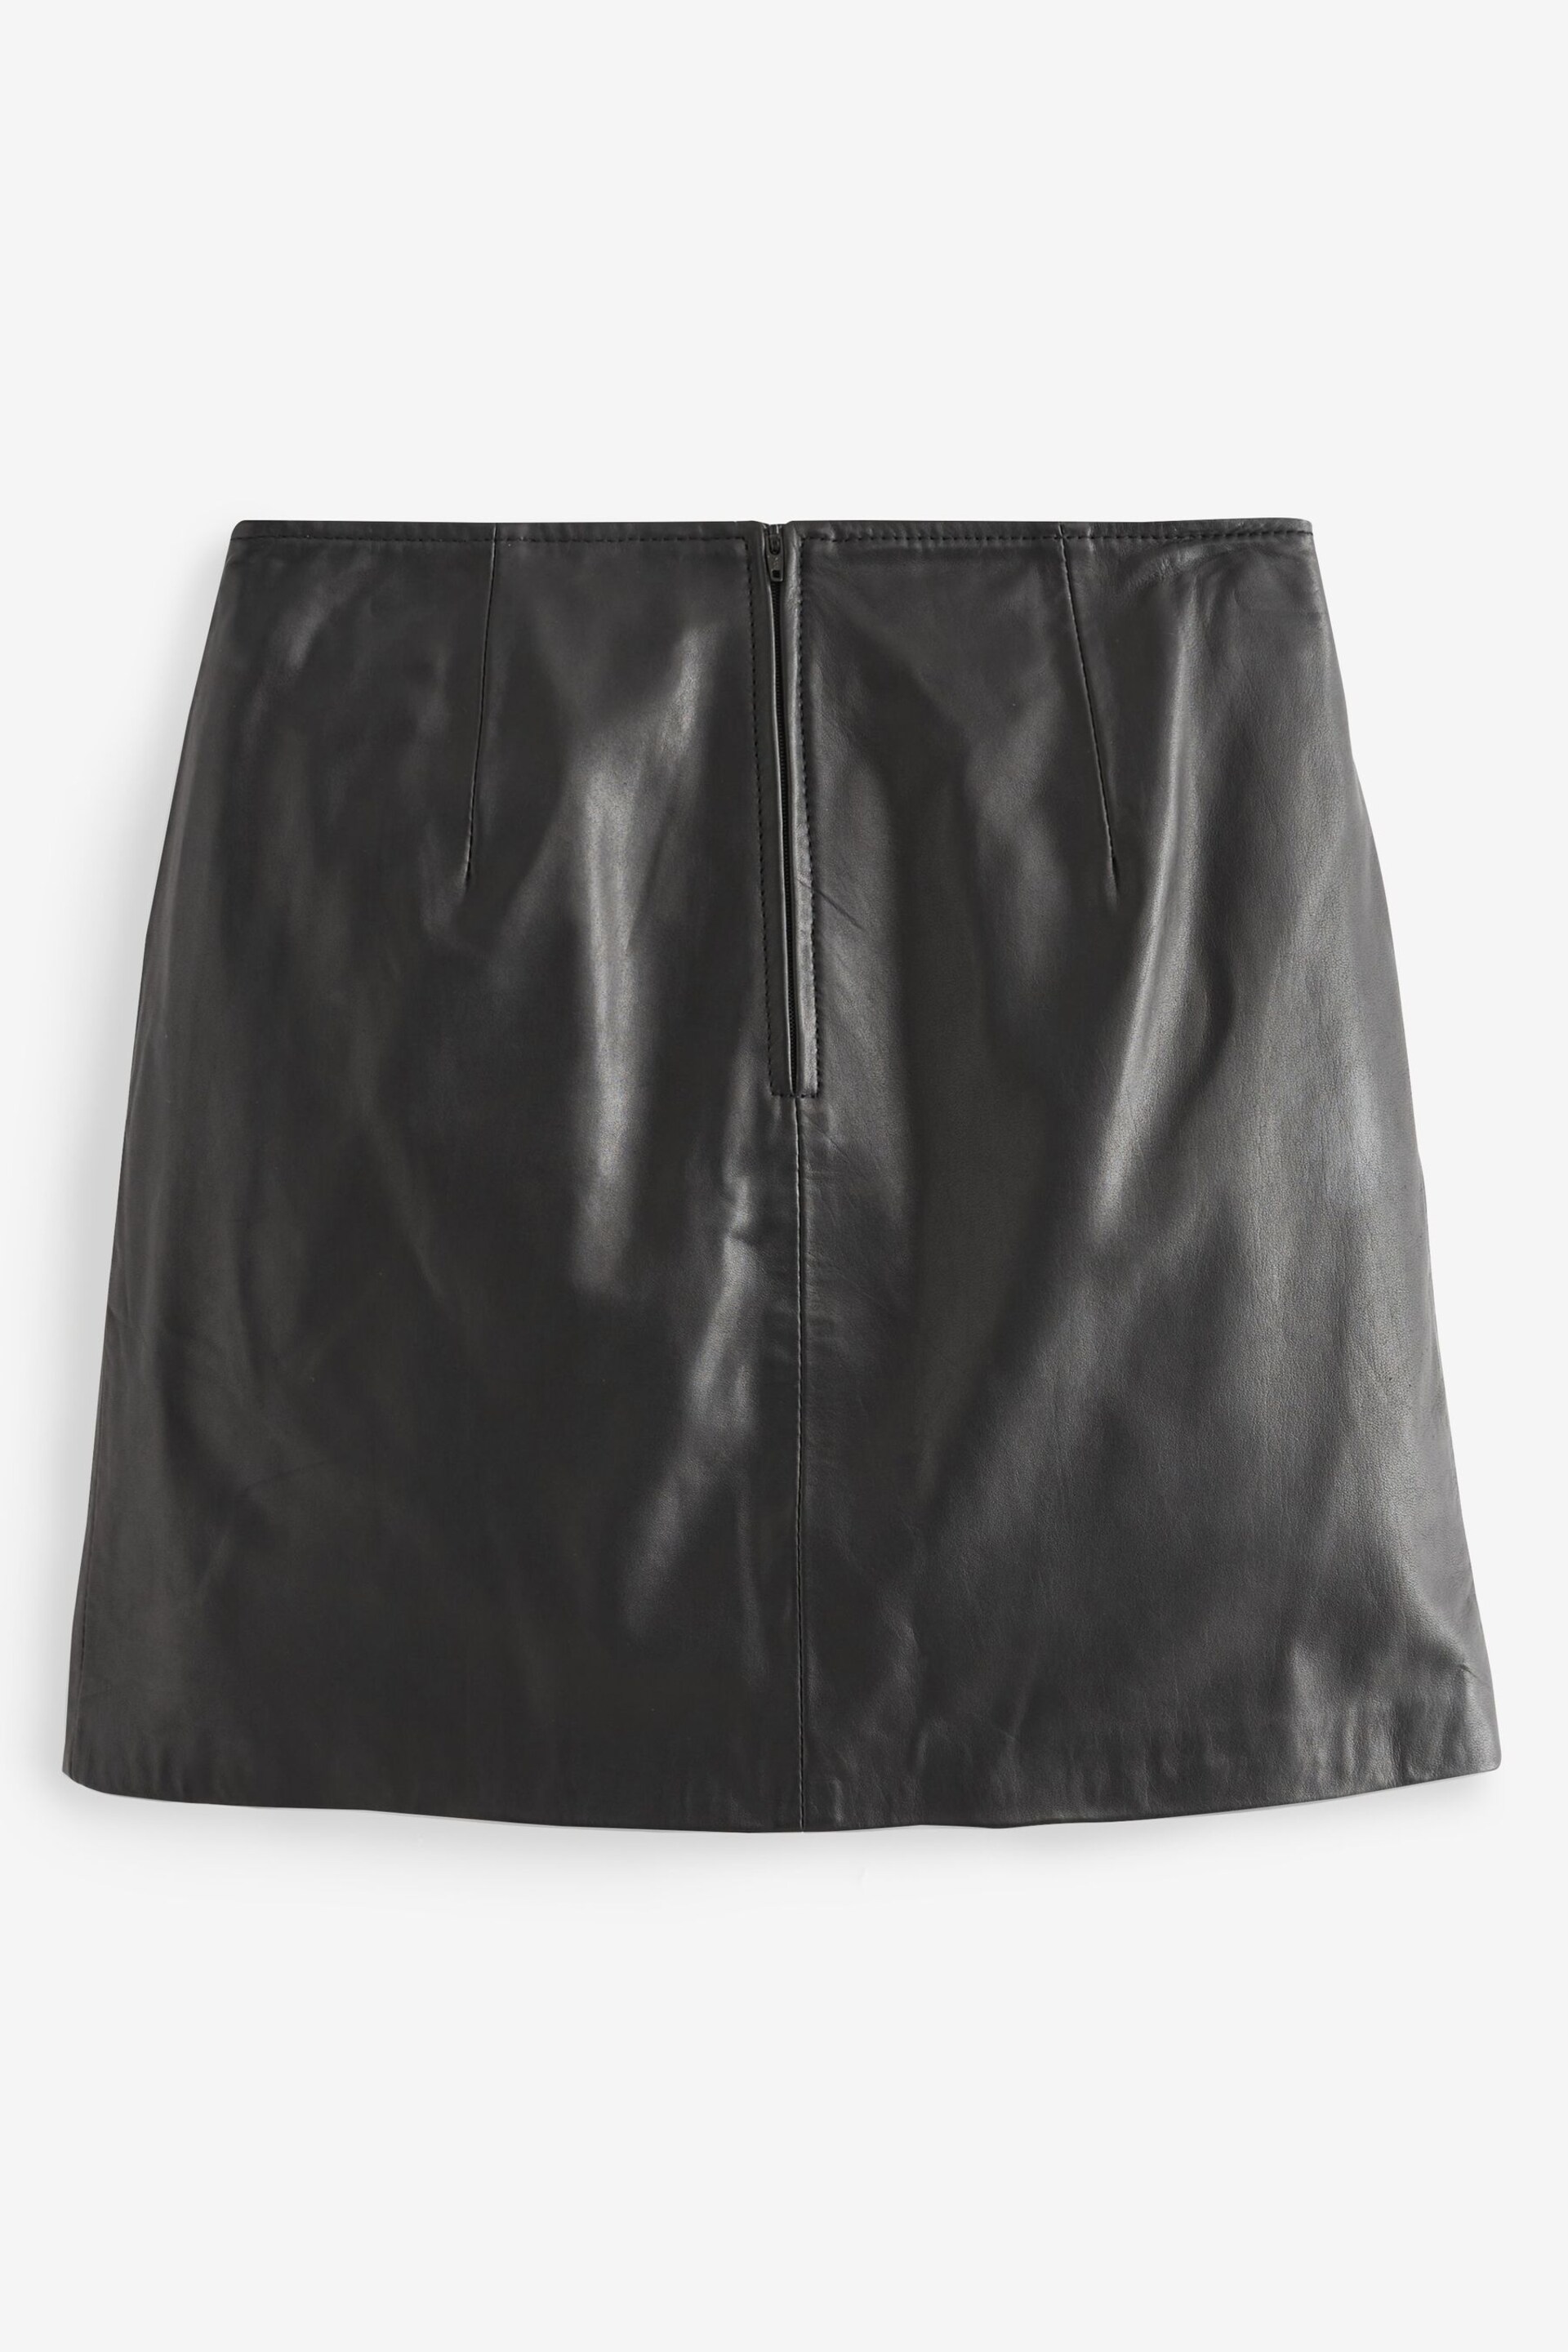 Urban Code Black Leather Panel Detail Mini Skirt - Image 4 of 6